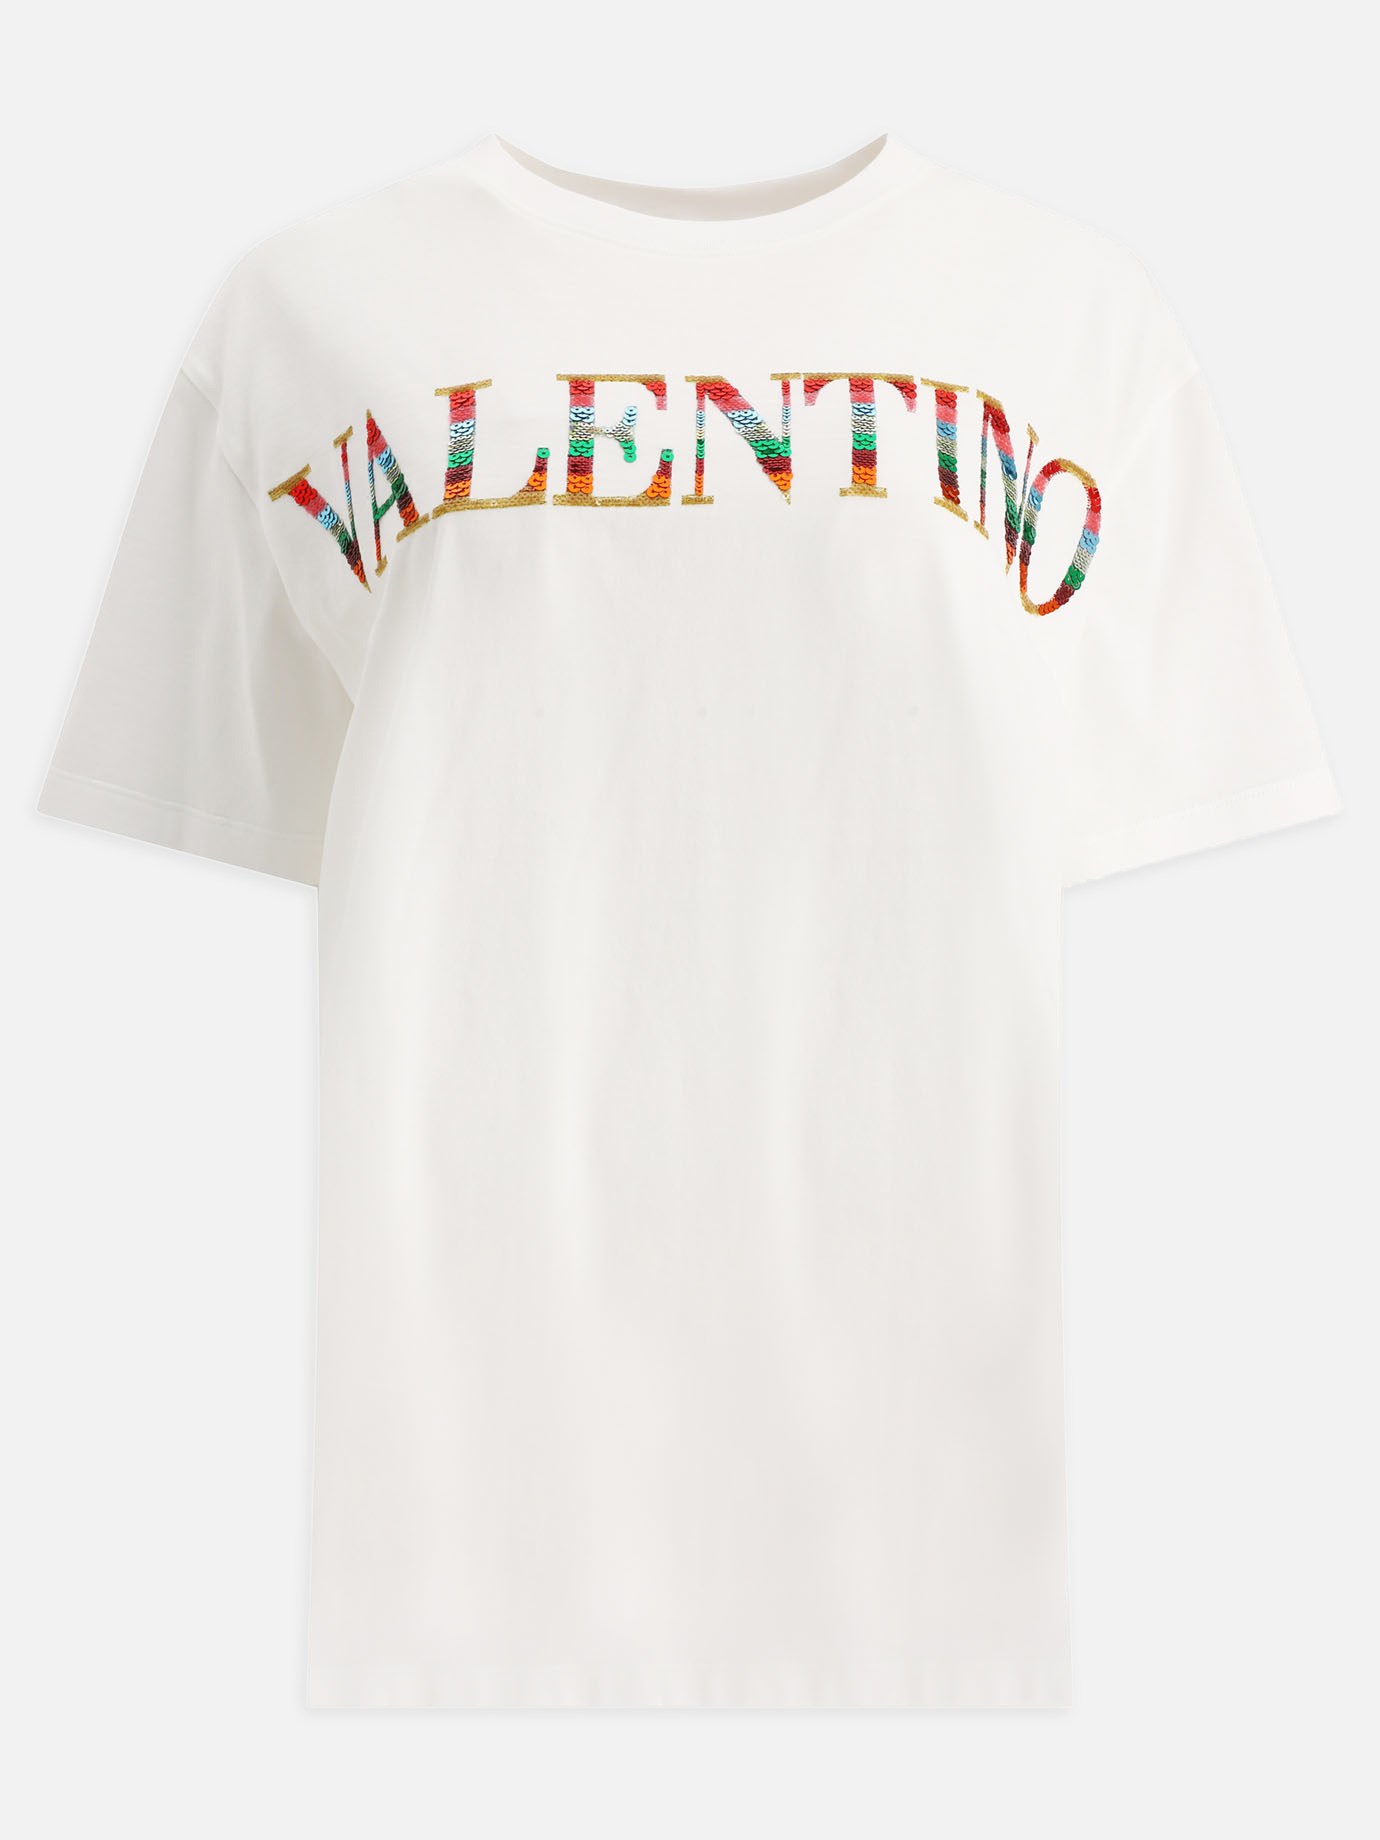  Sequin Valentino  t-shirtby Valentino - 4